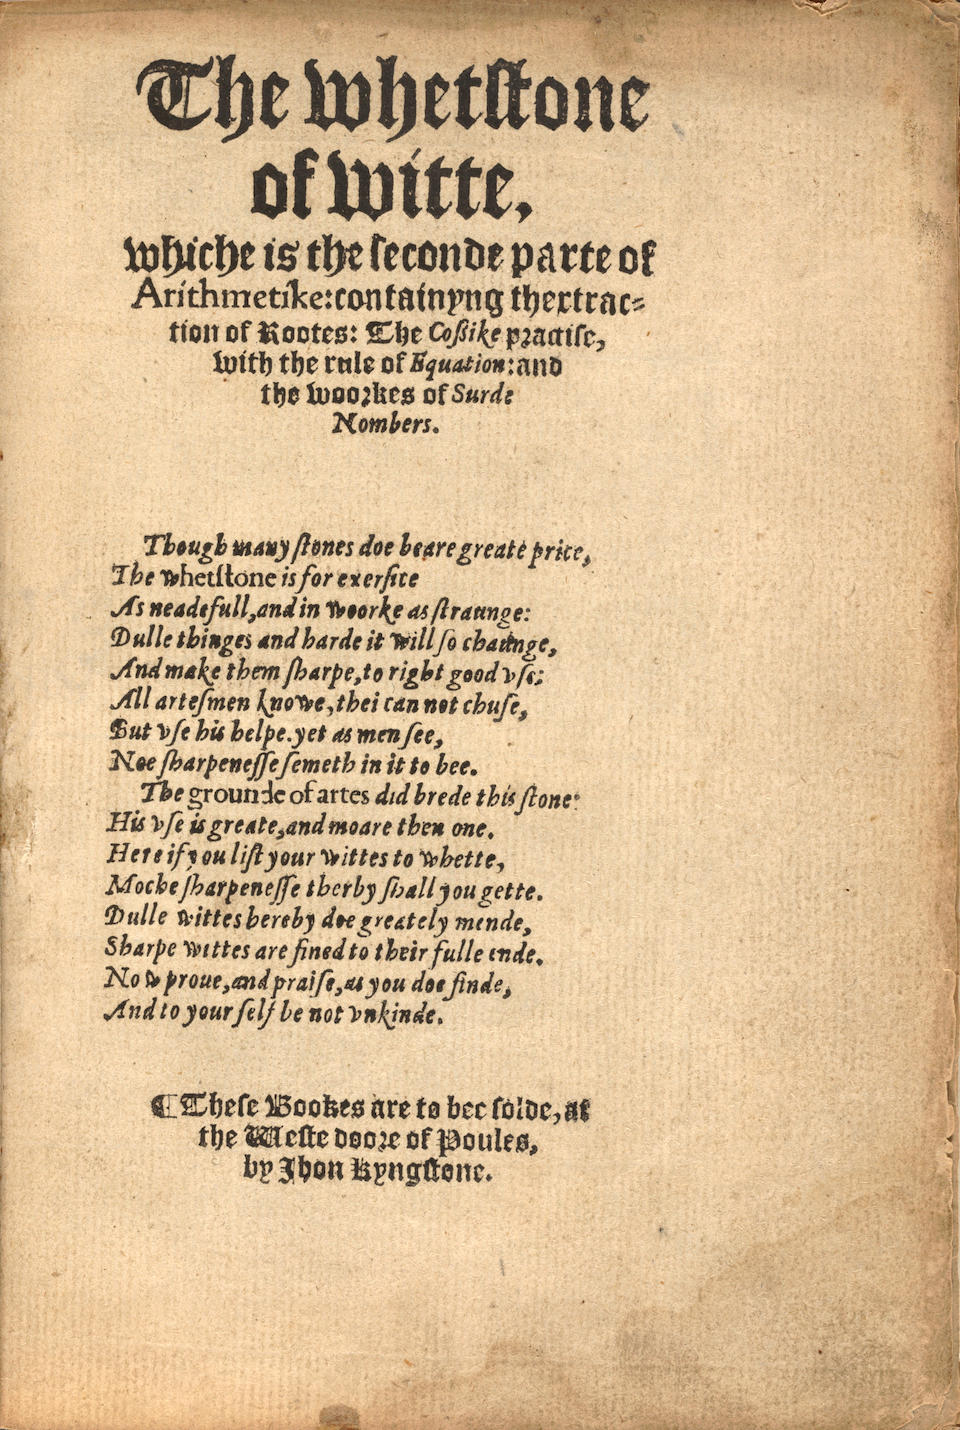 [MATHEMATICS] FIRST BOOK IN ENGLISH ON ALGEBRA. RECORDE, ROBERT. c.1510-1558. Whetstone of Witte... - Image 3 of 3